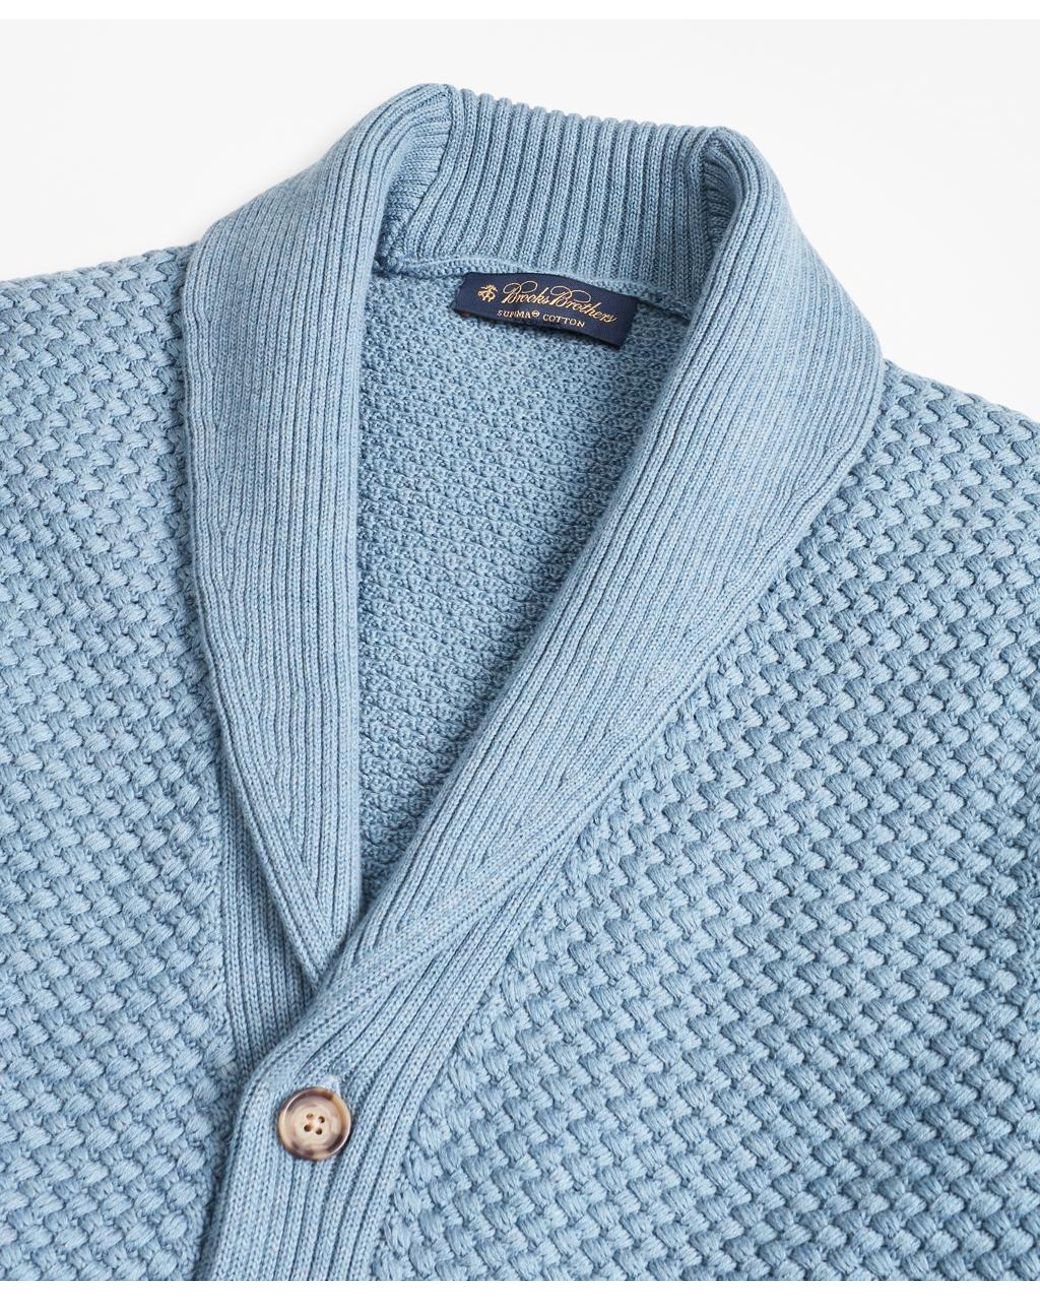 PAUL JONES Mens Knitted Cardigan Sweater Shawl Lapel Long Sleeve Cable Pattern